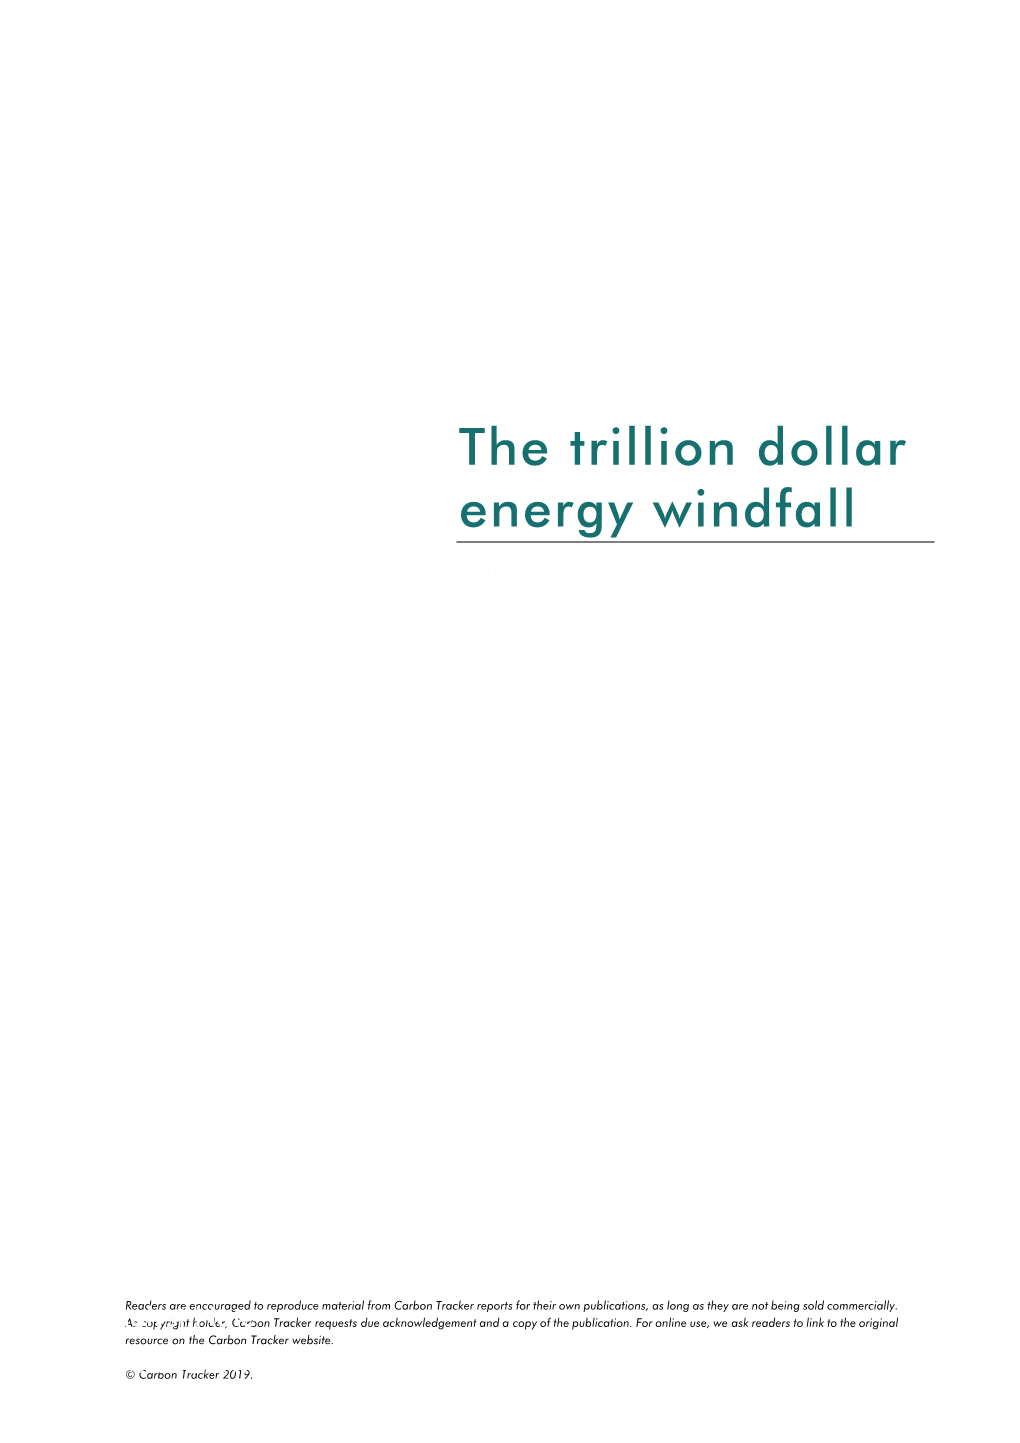 The Trillion Dollar Energy Windfall